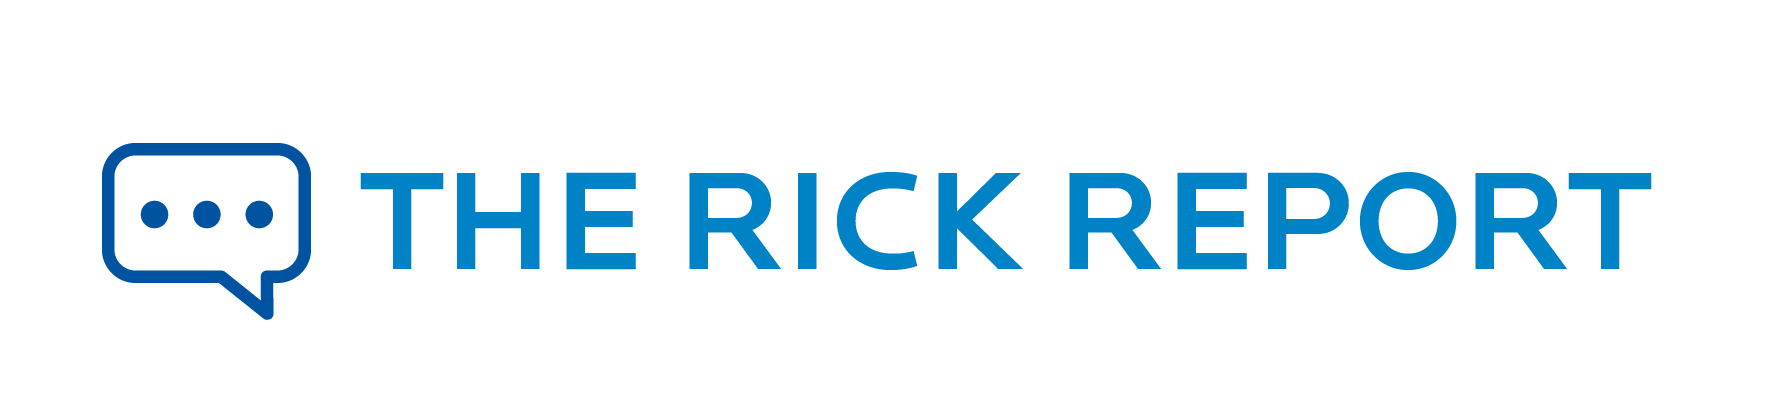 The Rick Report header